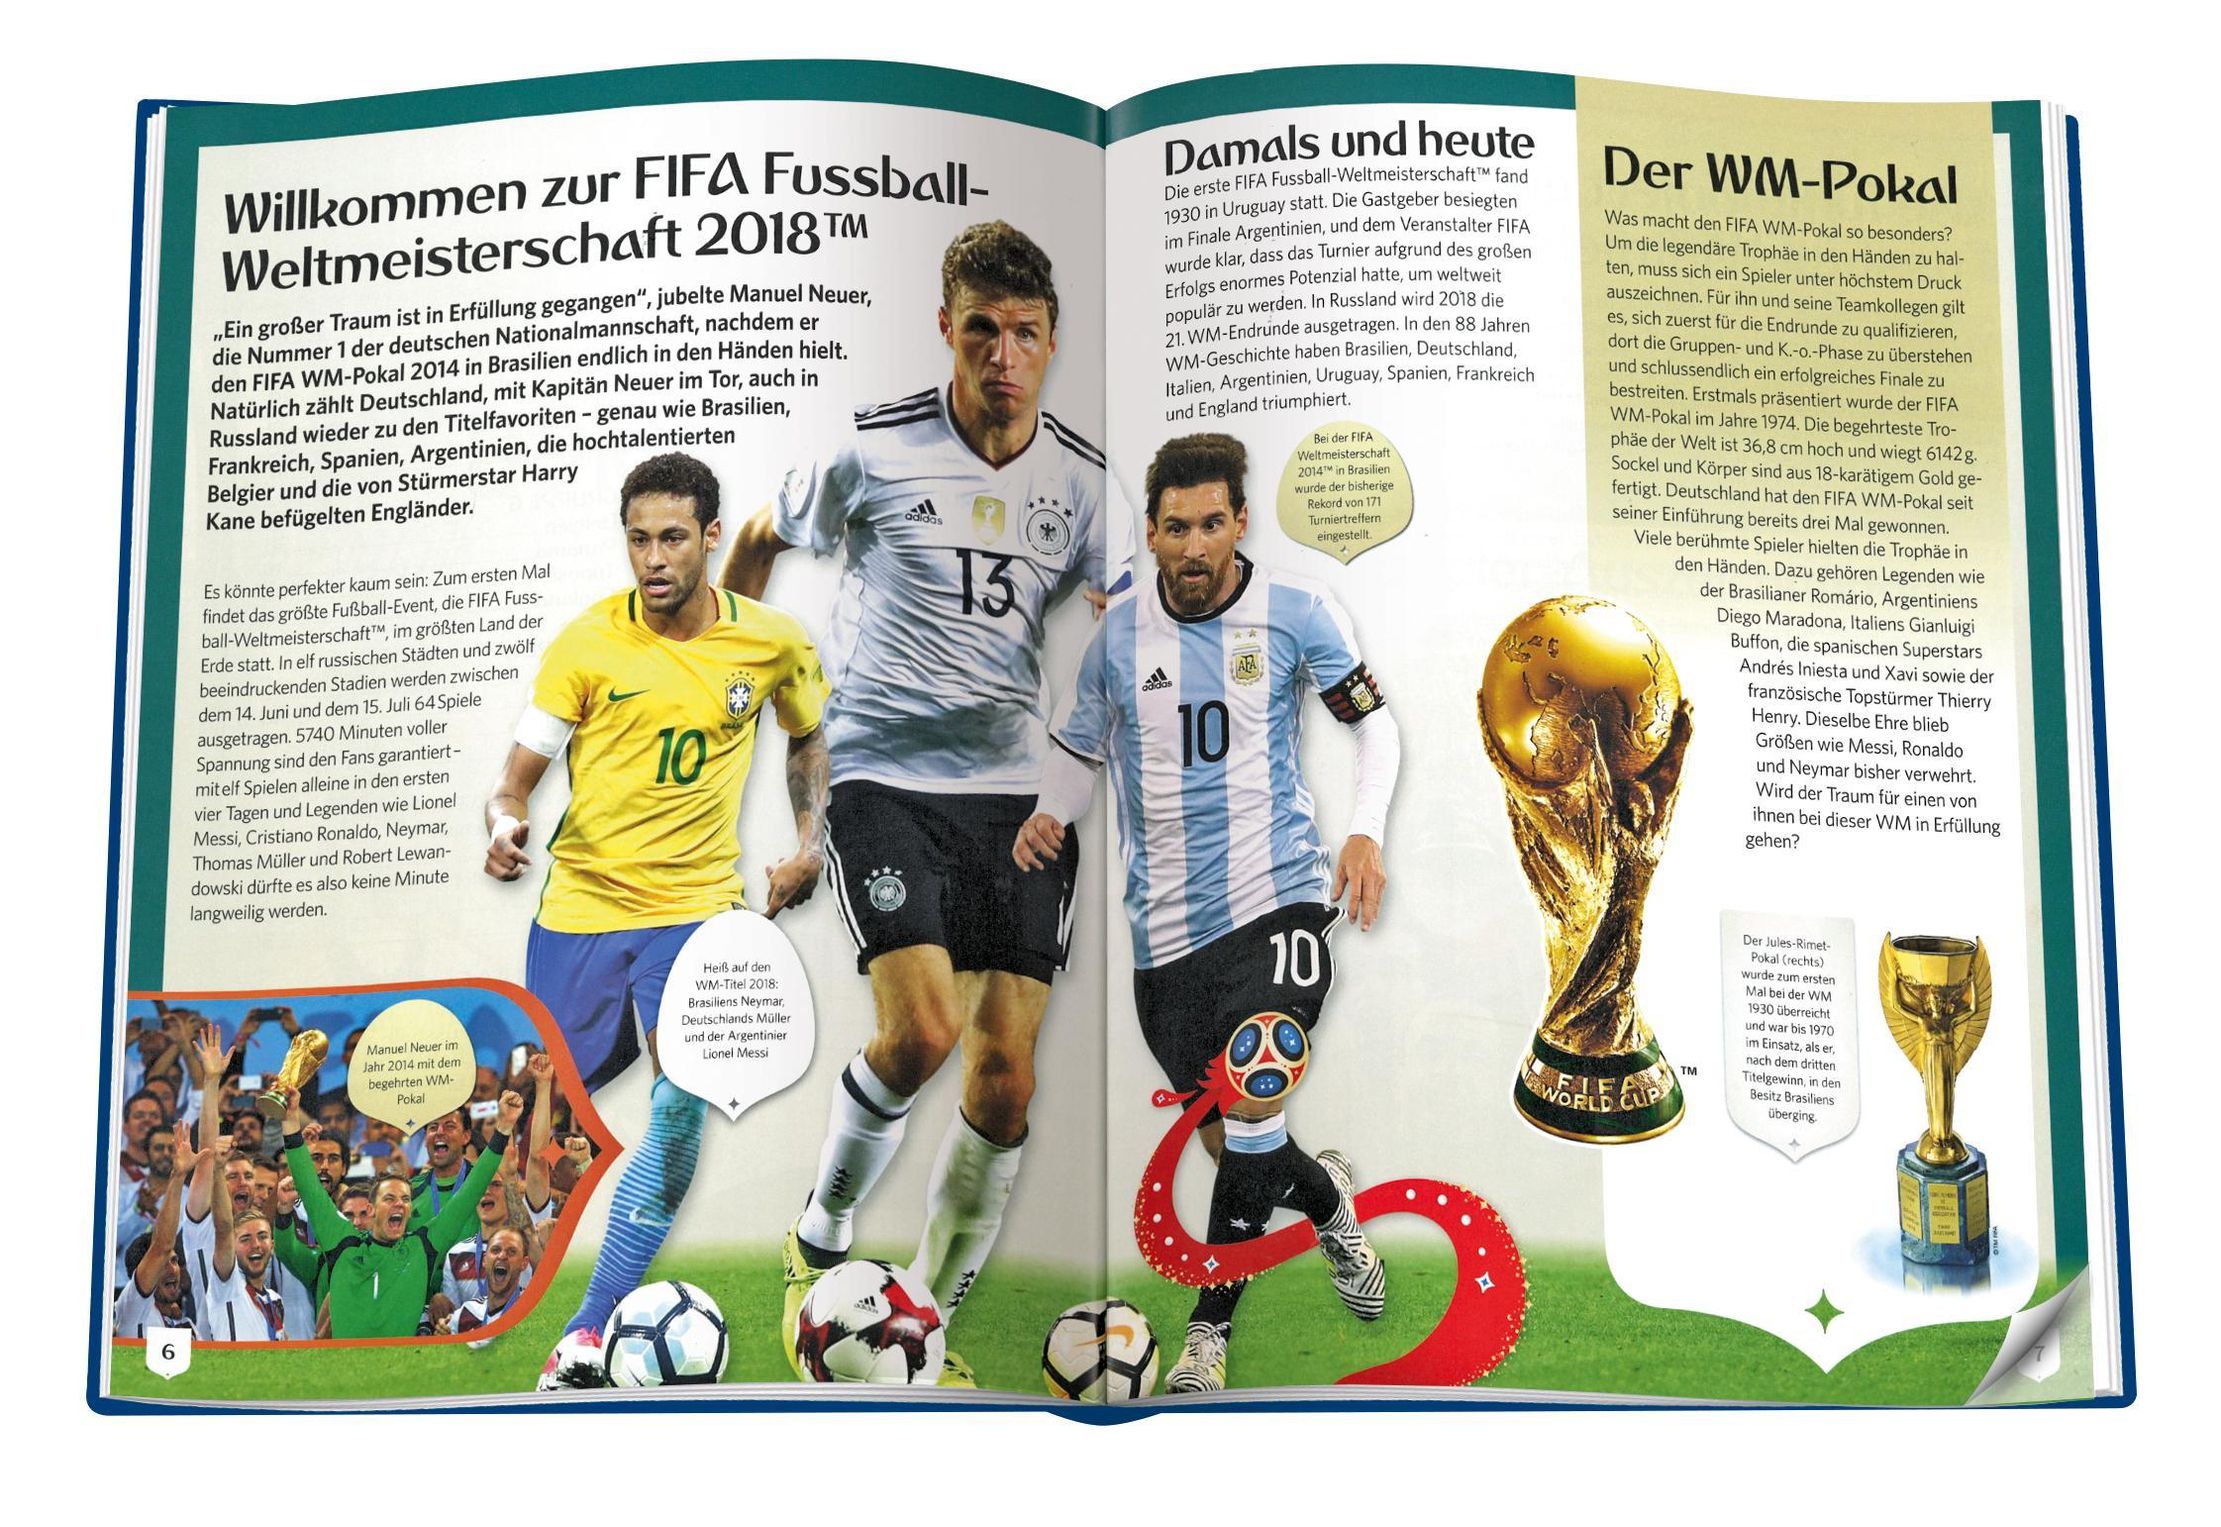 FIFA World Cup Russia 2018 - Das offizielle Buch zur WM | Weltbild.ch